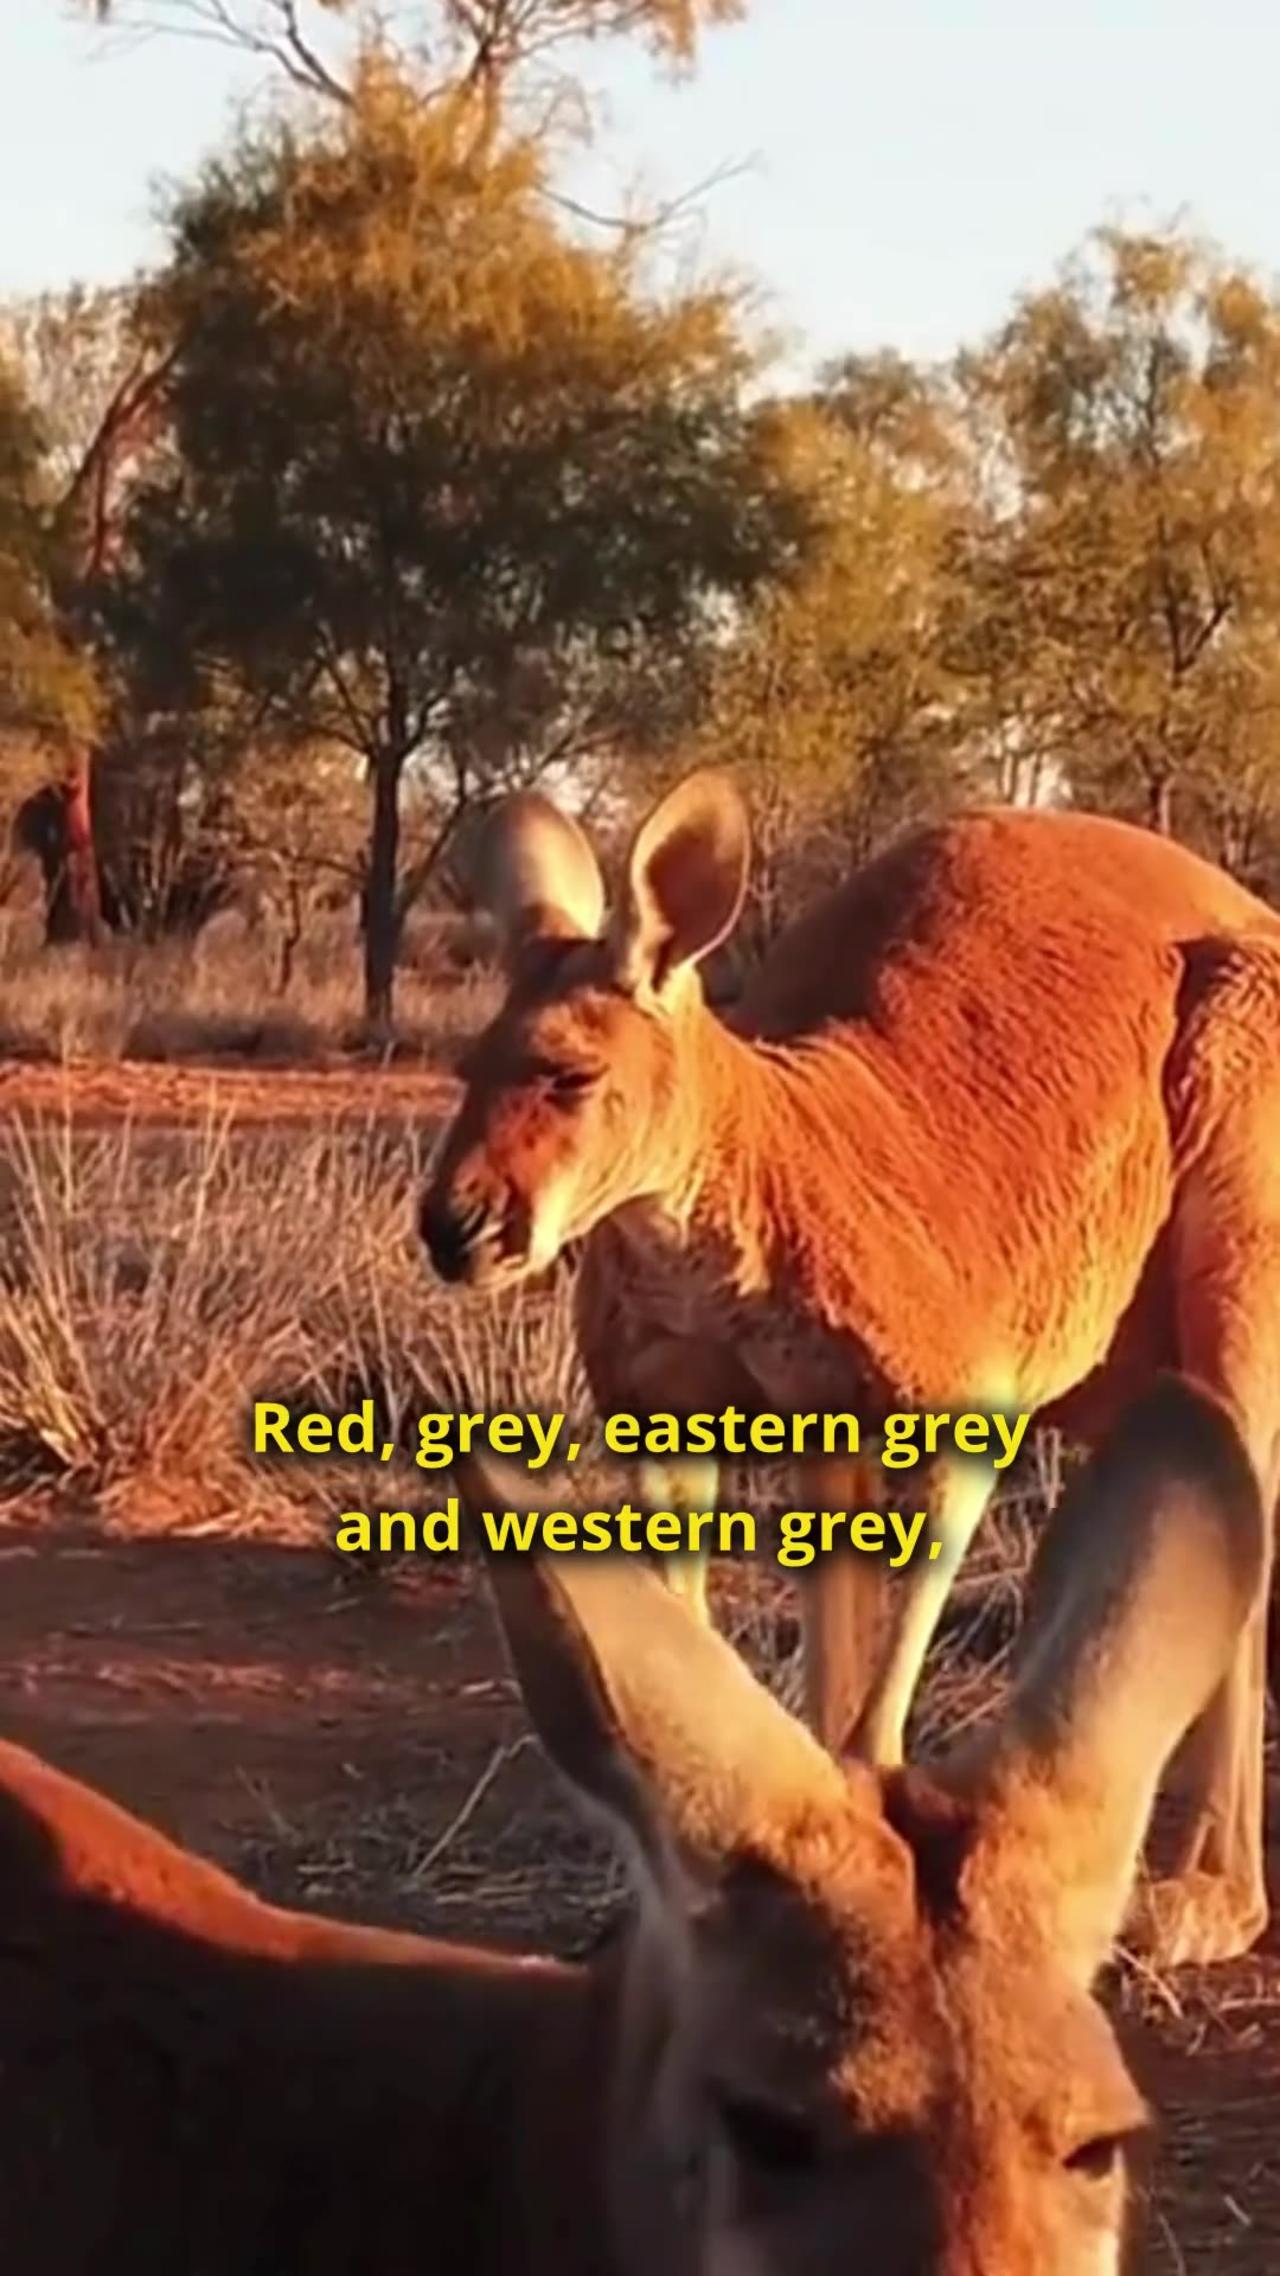 Kangaroo - The Largest Marsupial